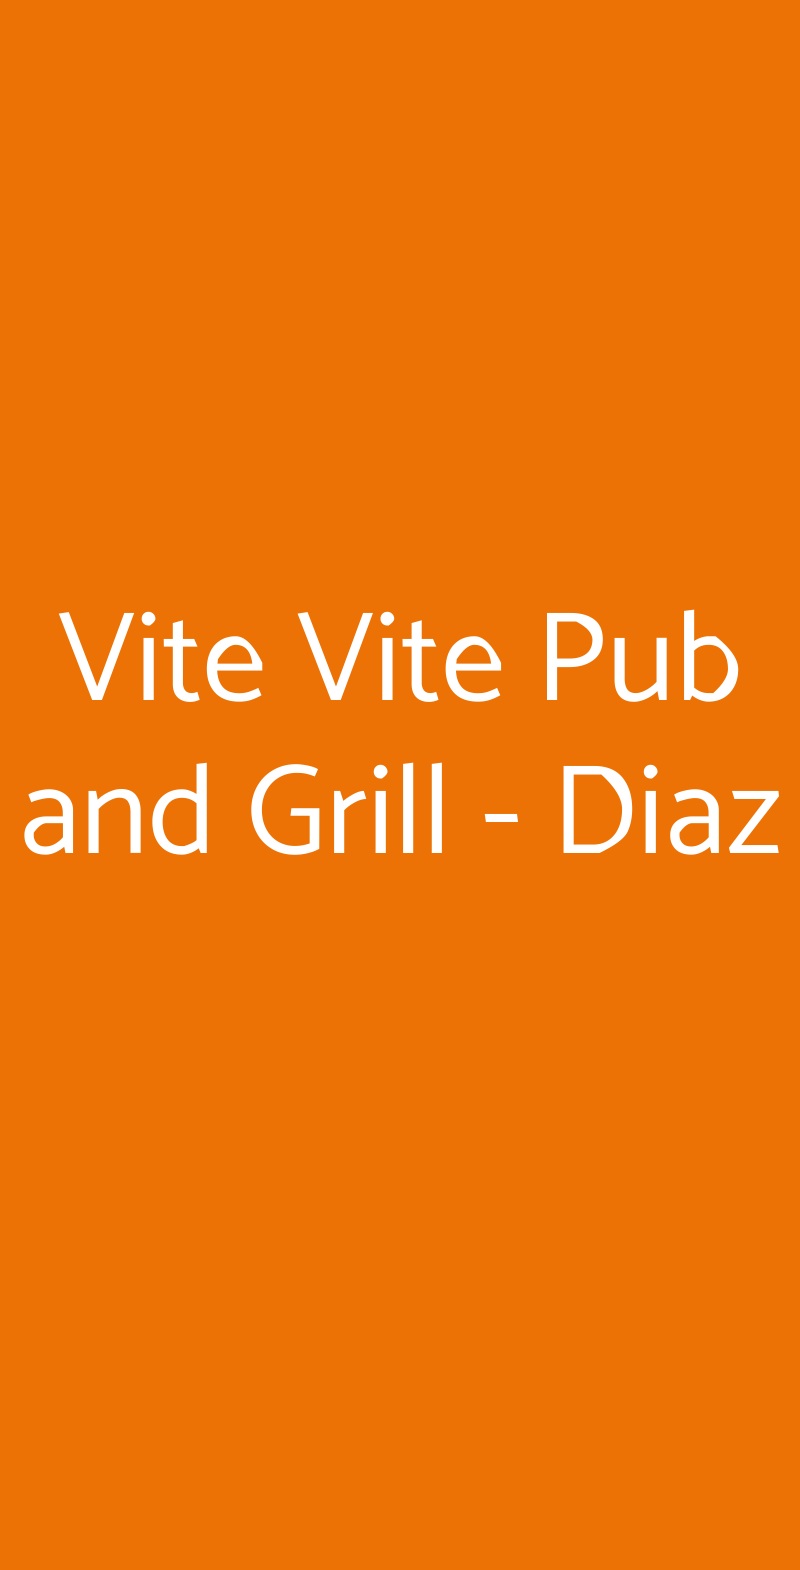 Vite Vite Pub and Grill - Diaz Napoli menù 1 pagina